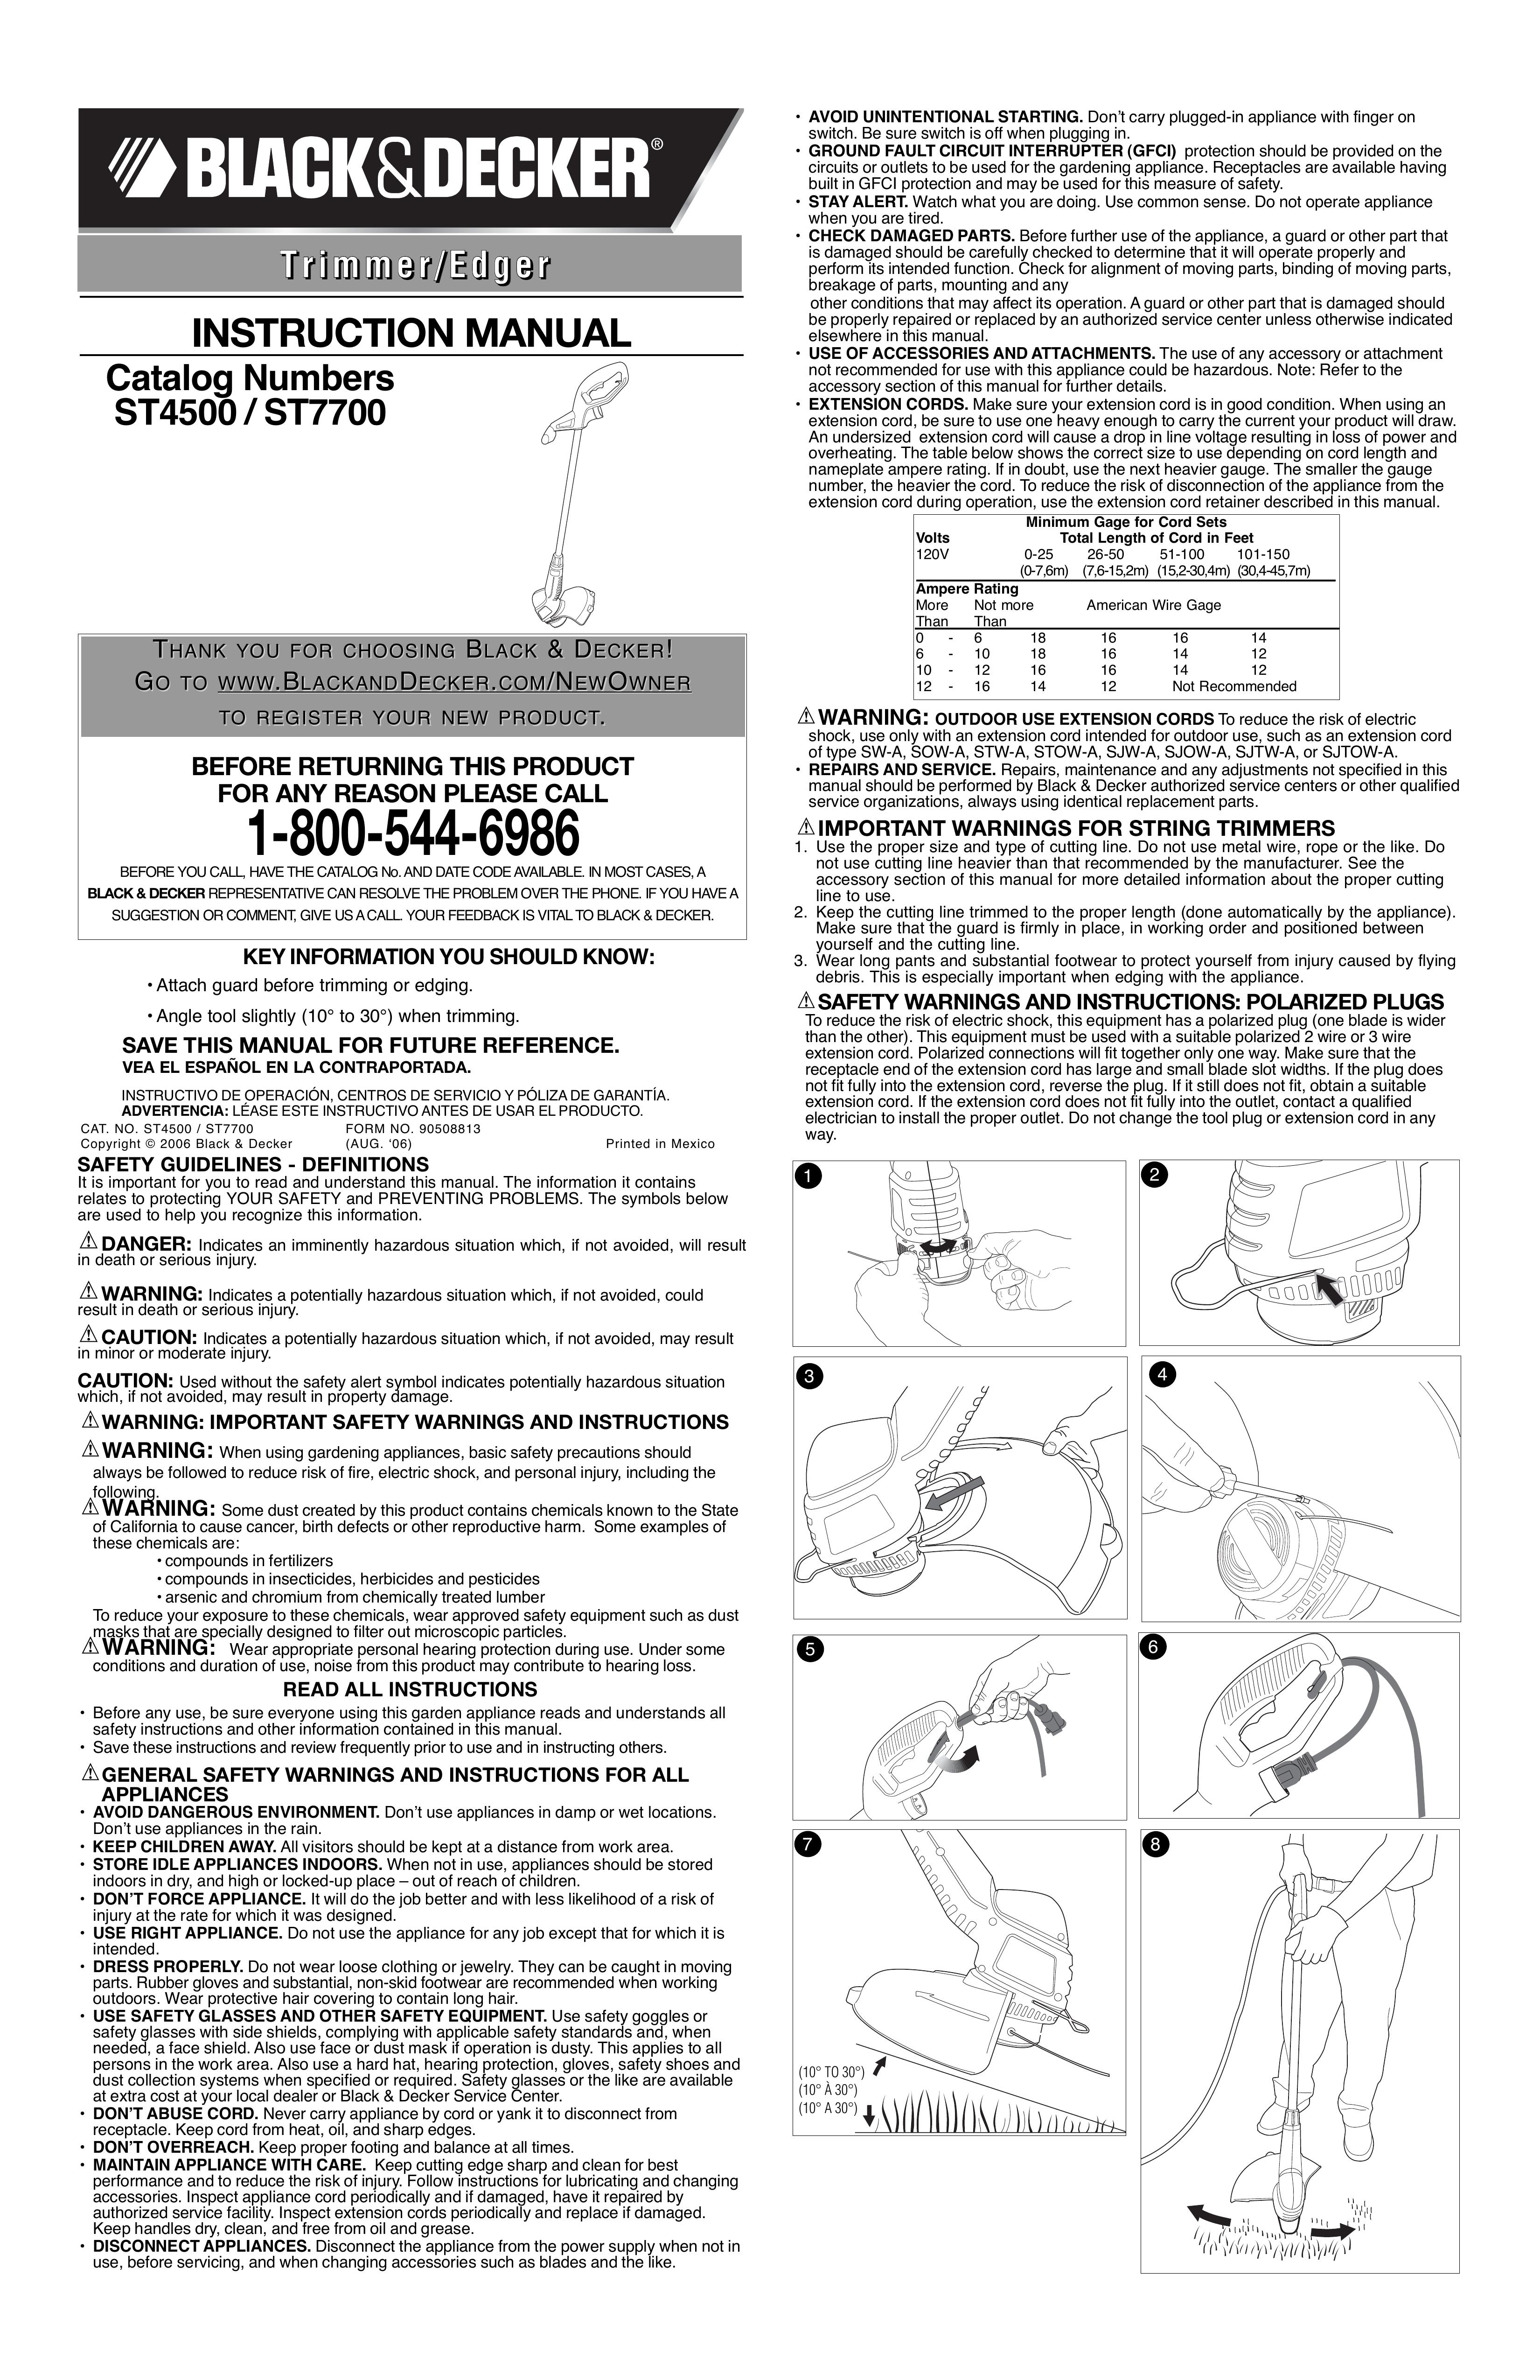 Black & Decker 90508813 Trimmer User Manual